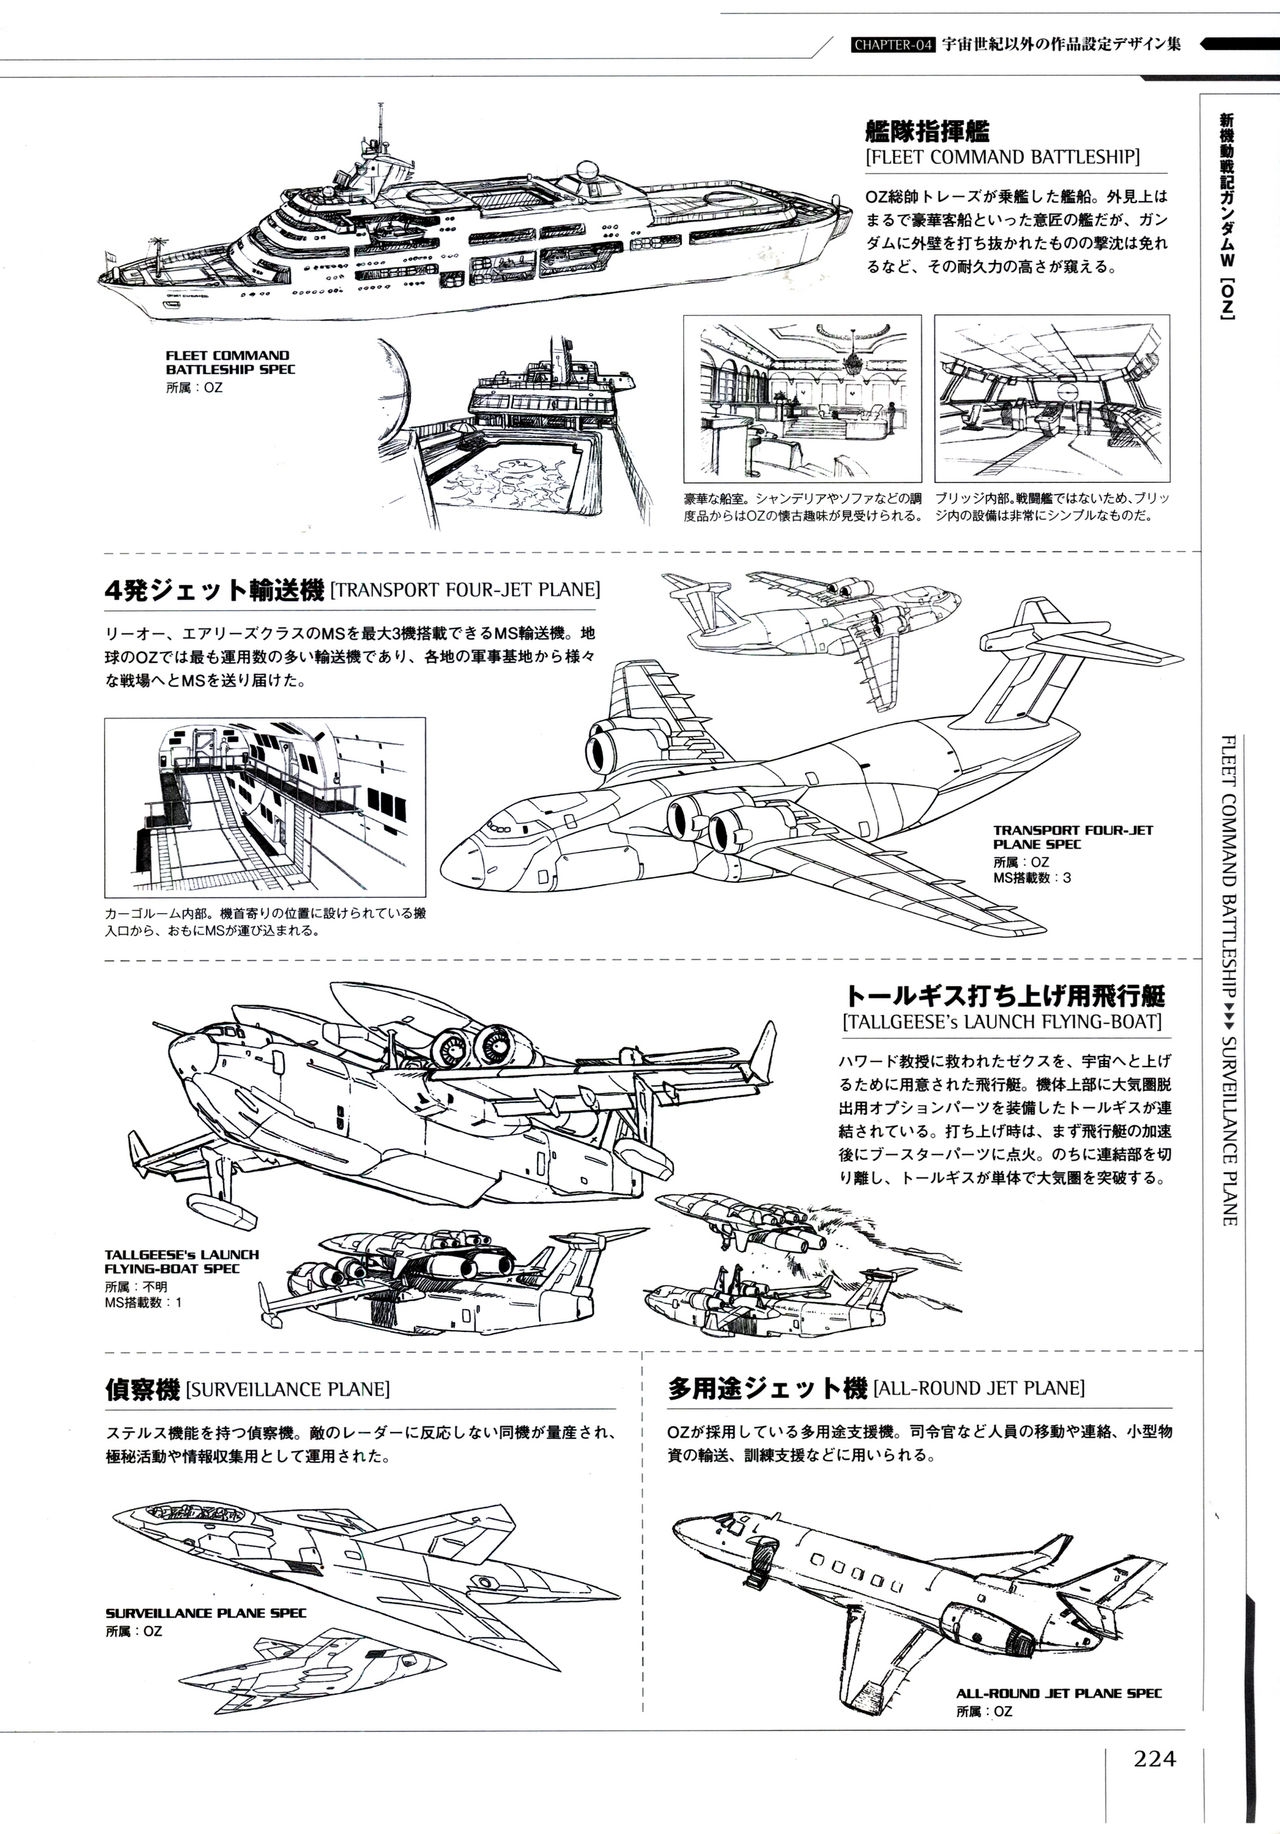 Mobile Suit Gundam - Ship & Aerospace Plane Encyclopedia - Revised Edition 229